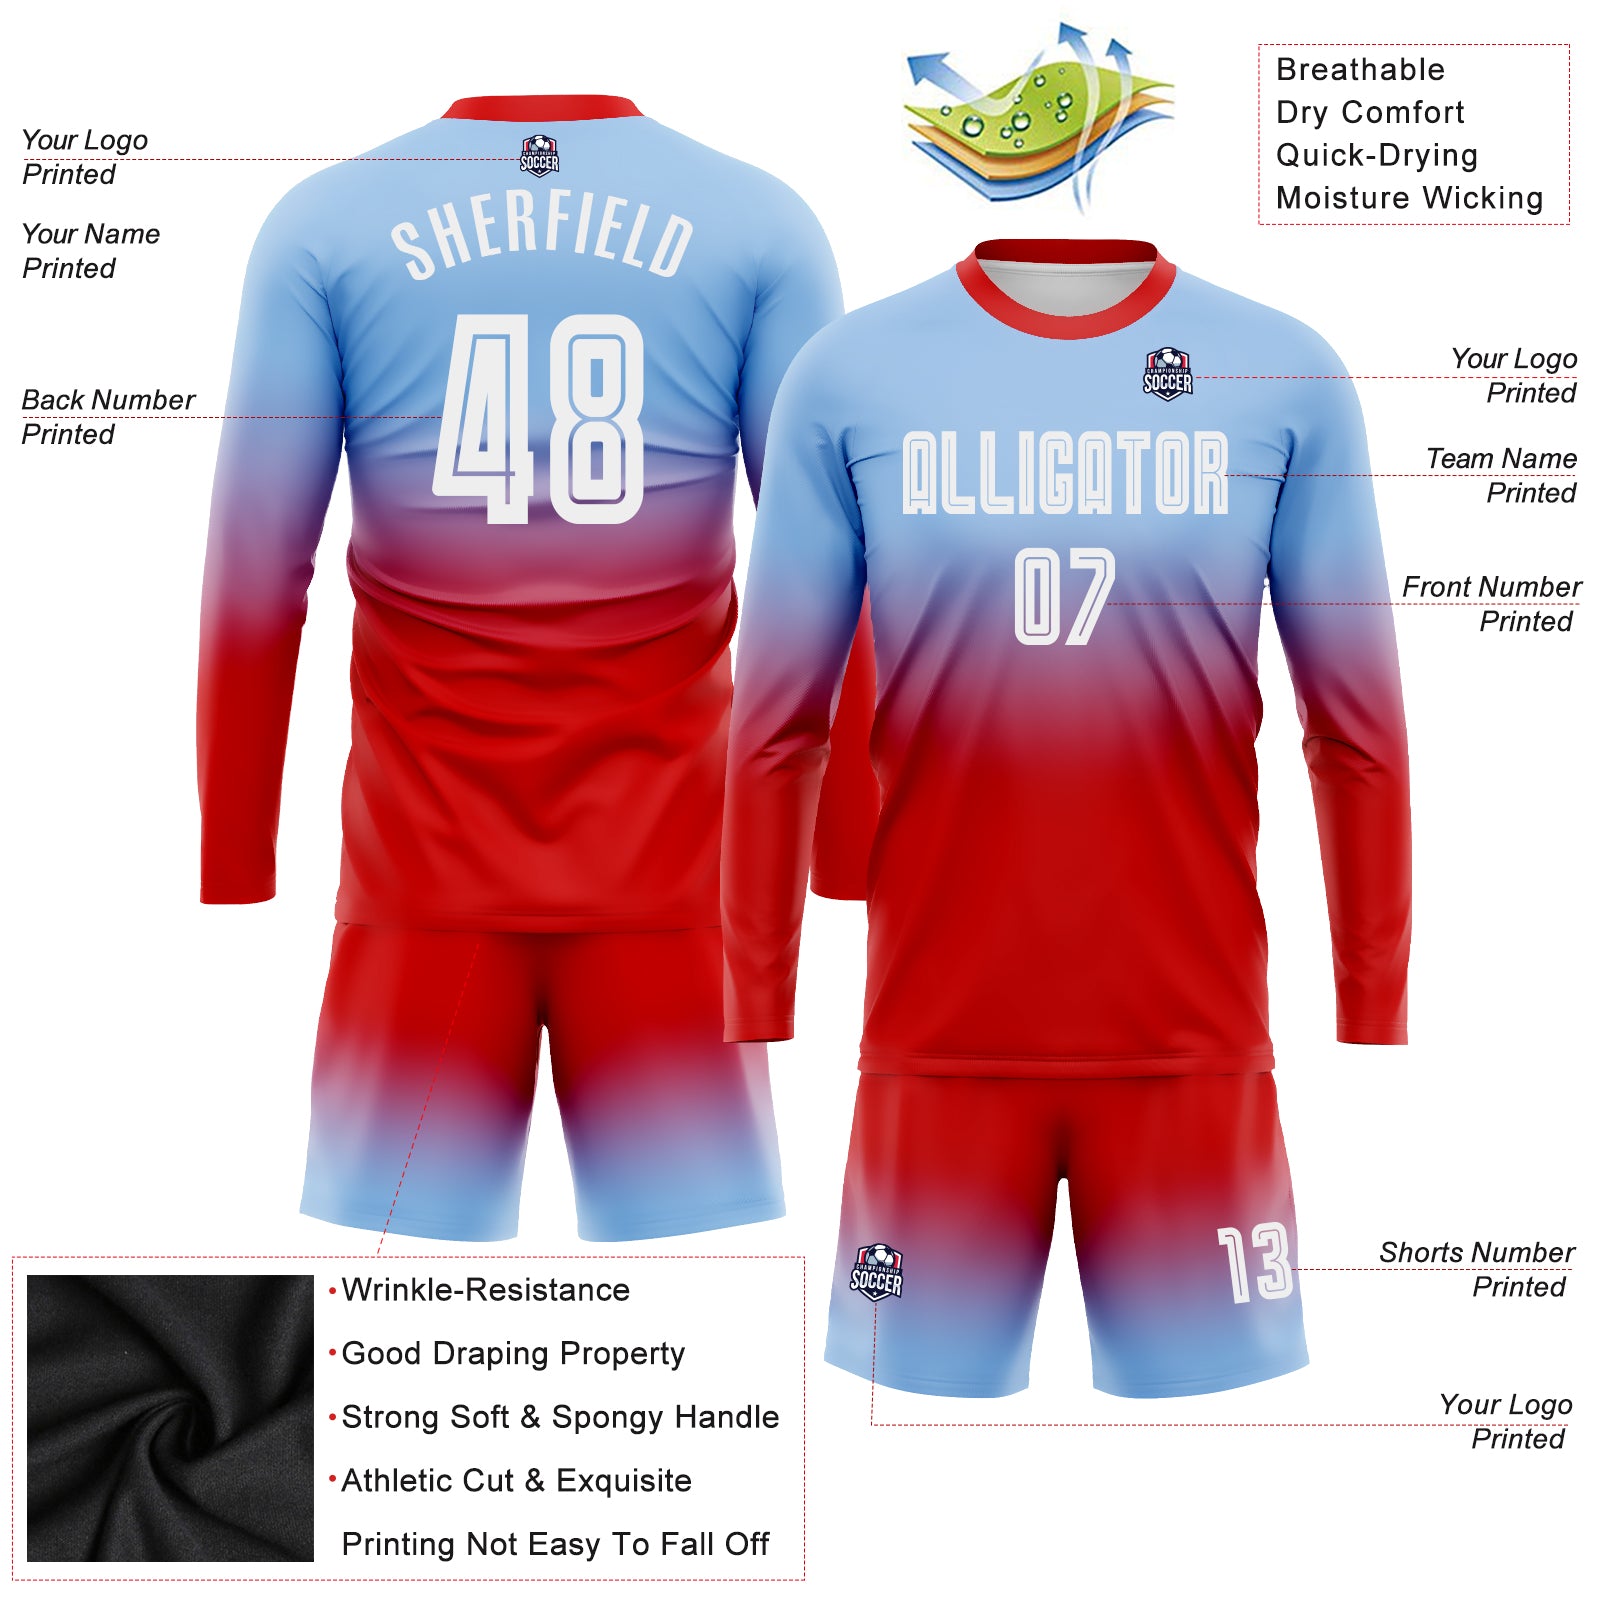 FANSIDEA Custom Soccer Jersey Uniform Light Blue Pink-White Sublimation Men's Size:2XL